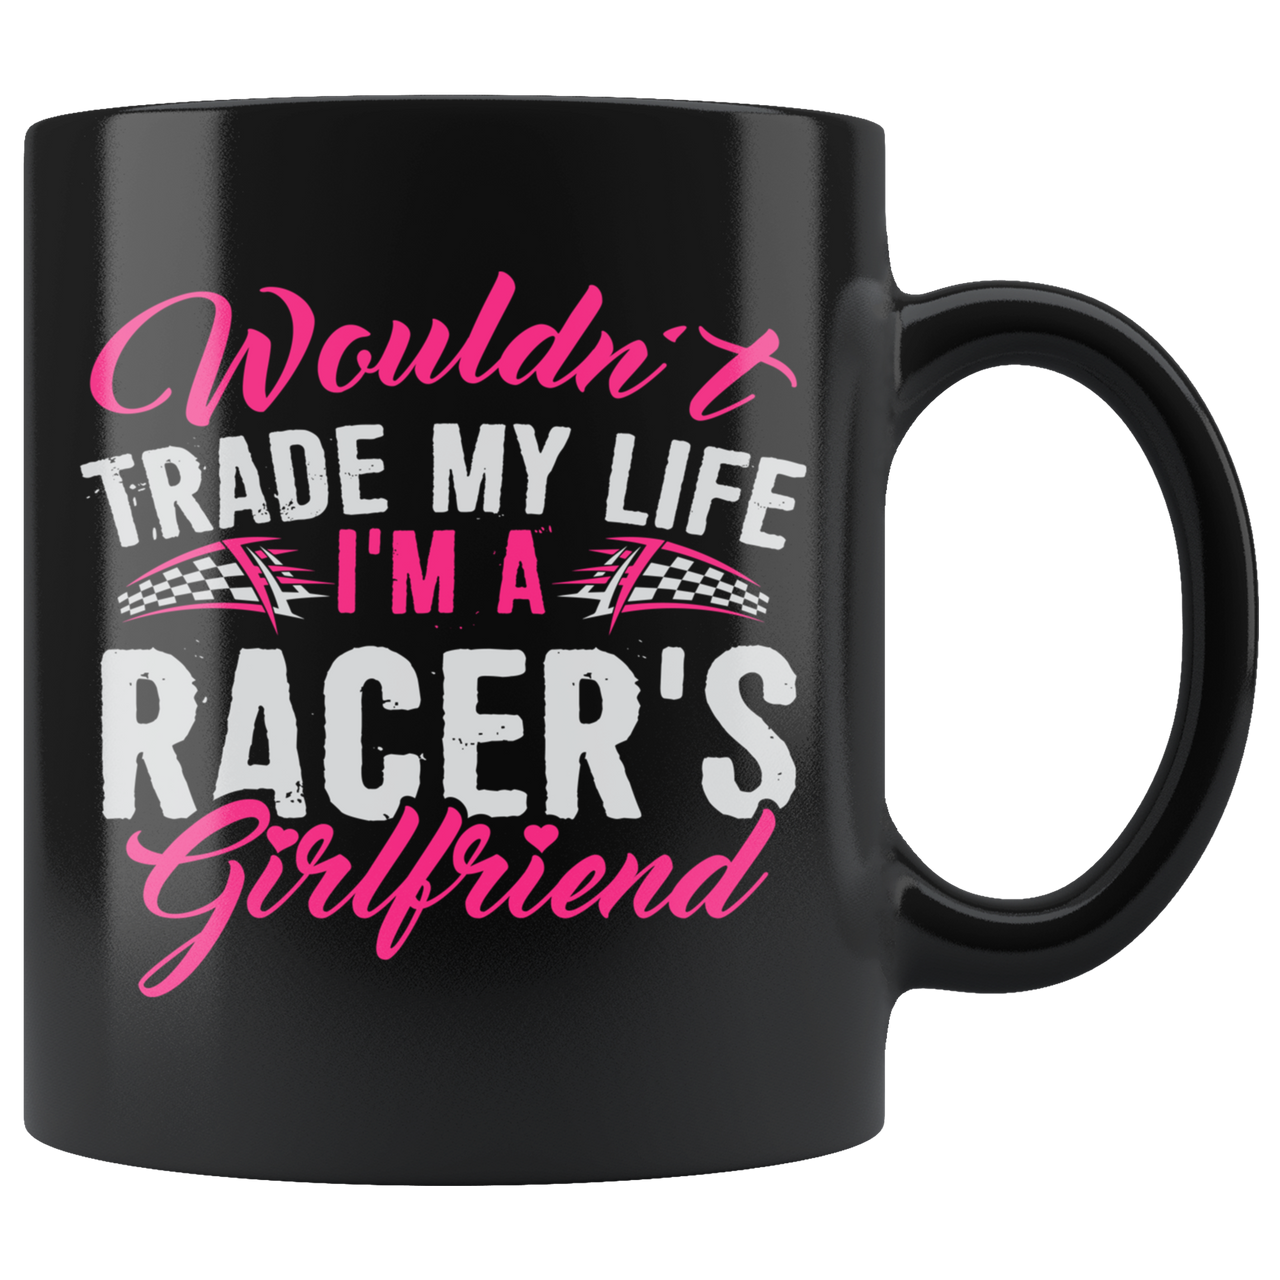 I'm A Racer's Girlfriend Mug!